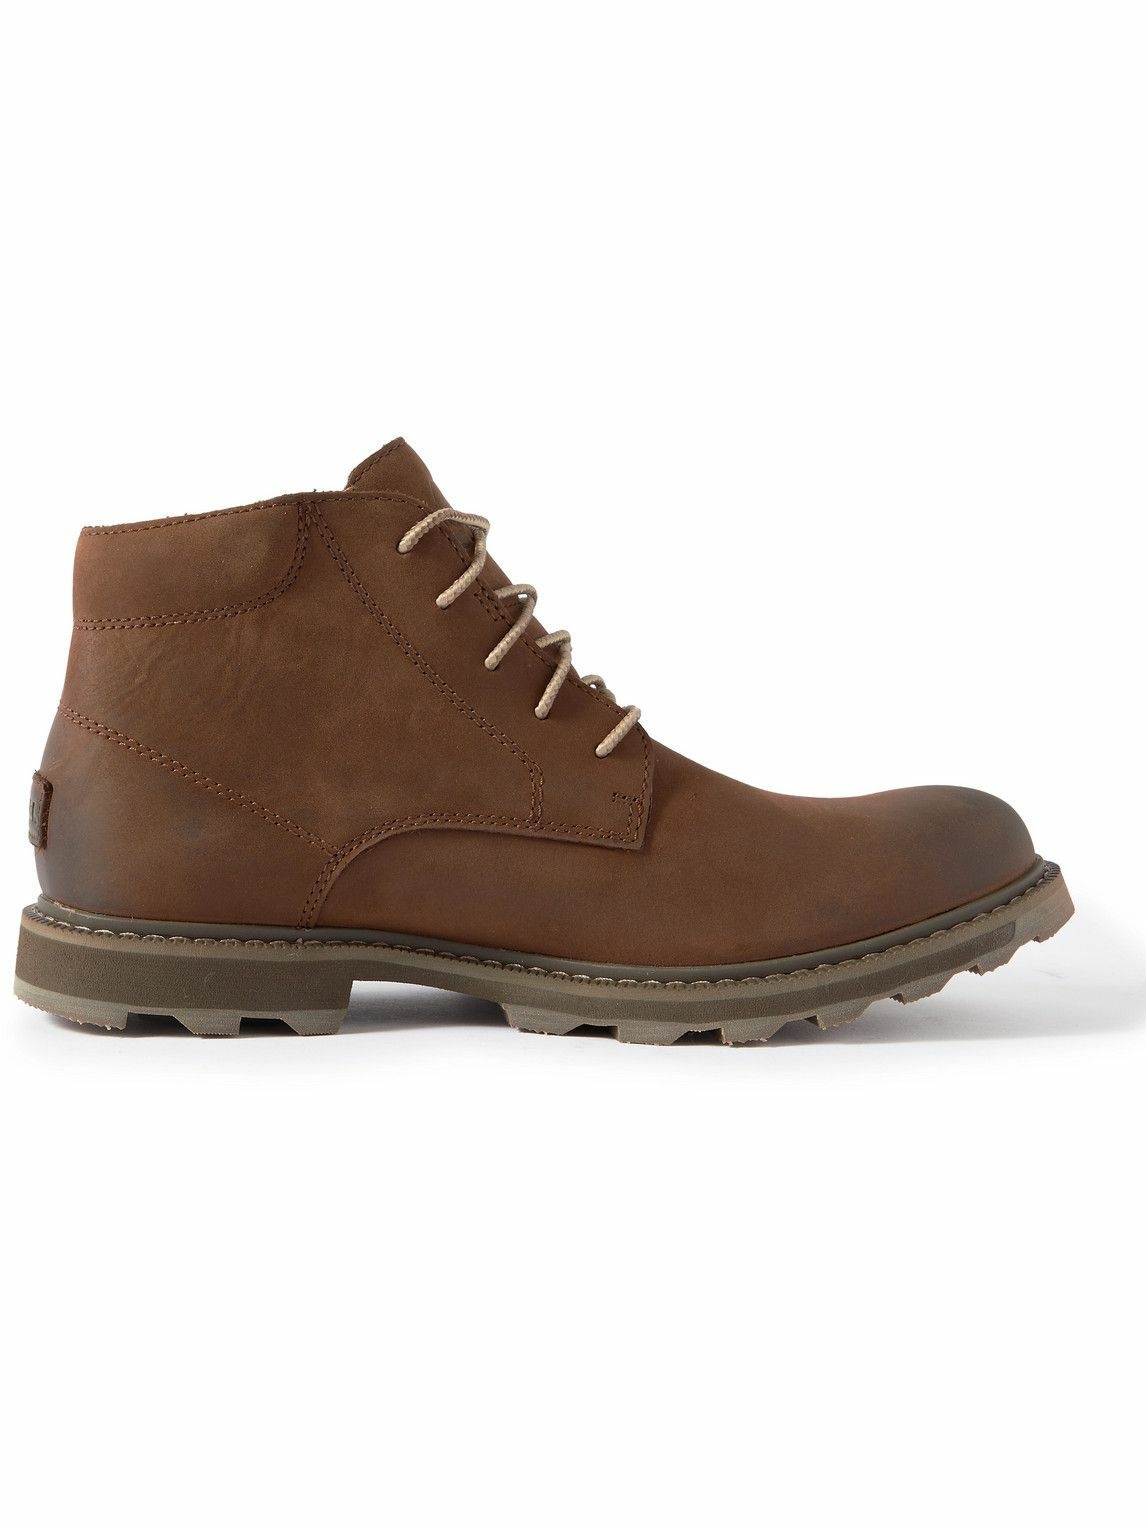 Photo: Sorel - Madson™ II Leather Chukka Boots - Brown